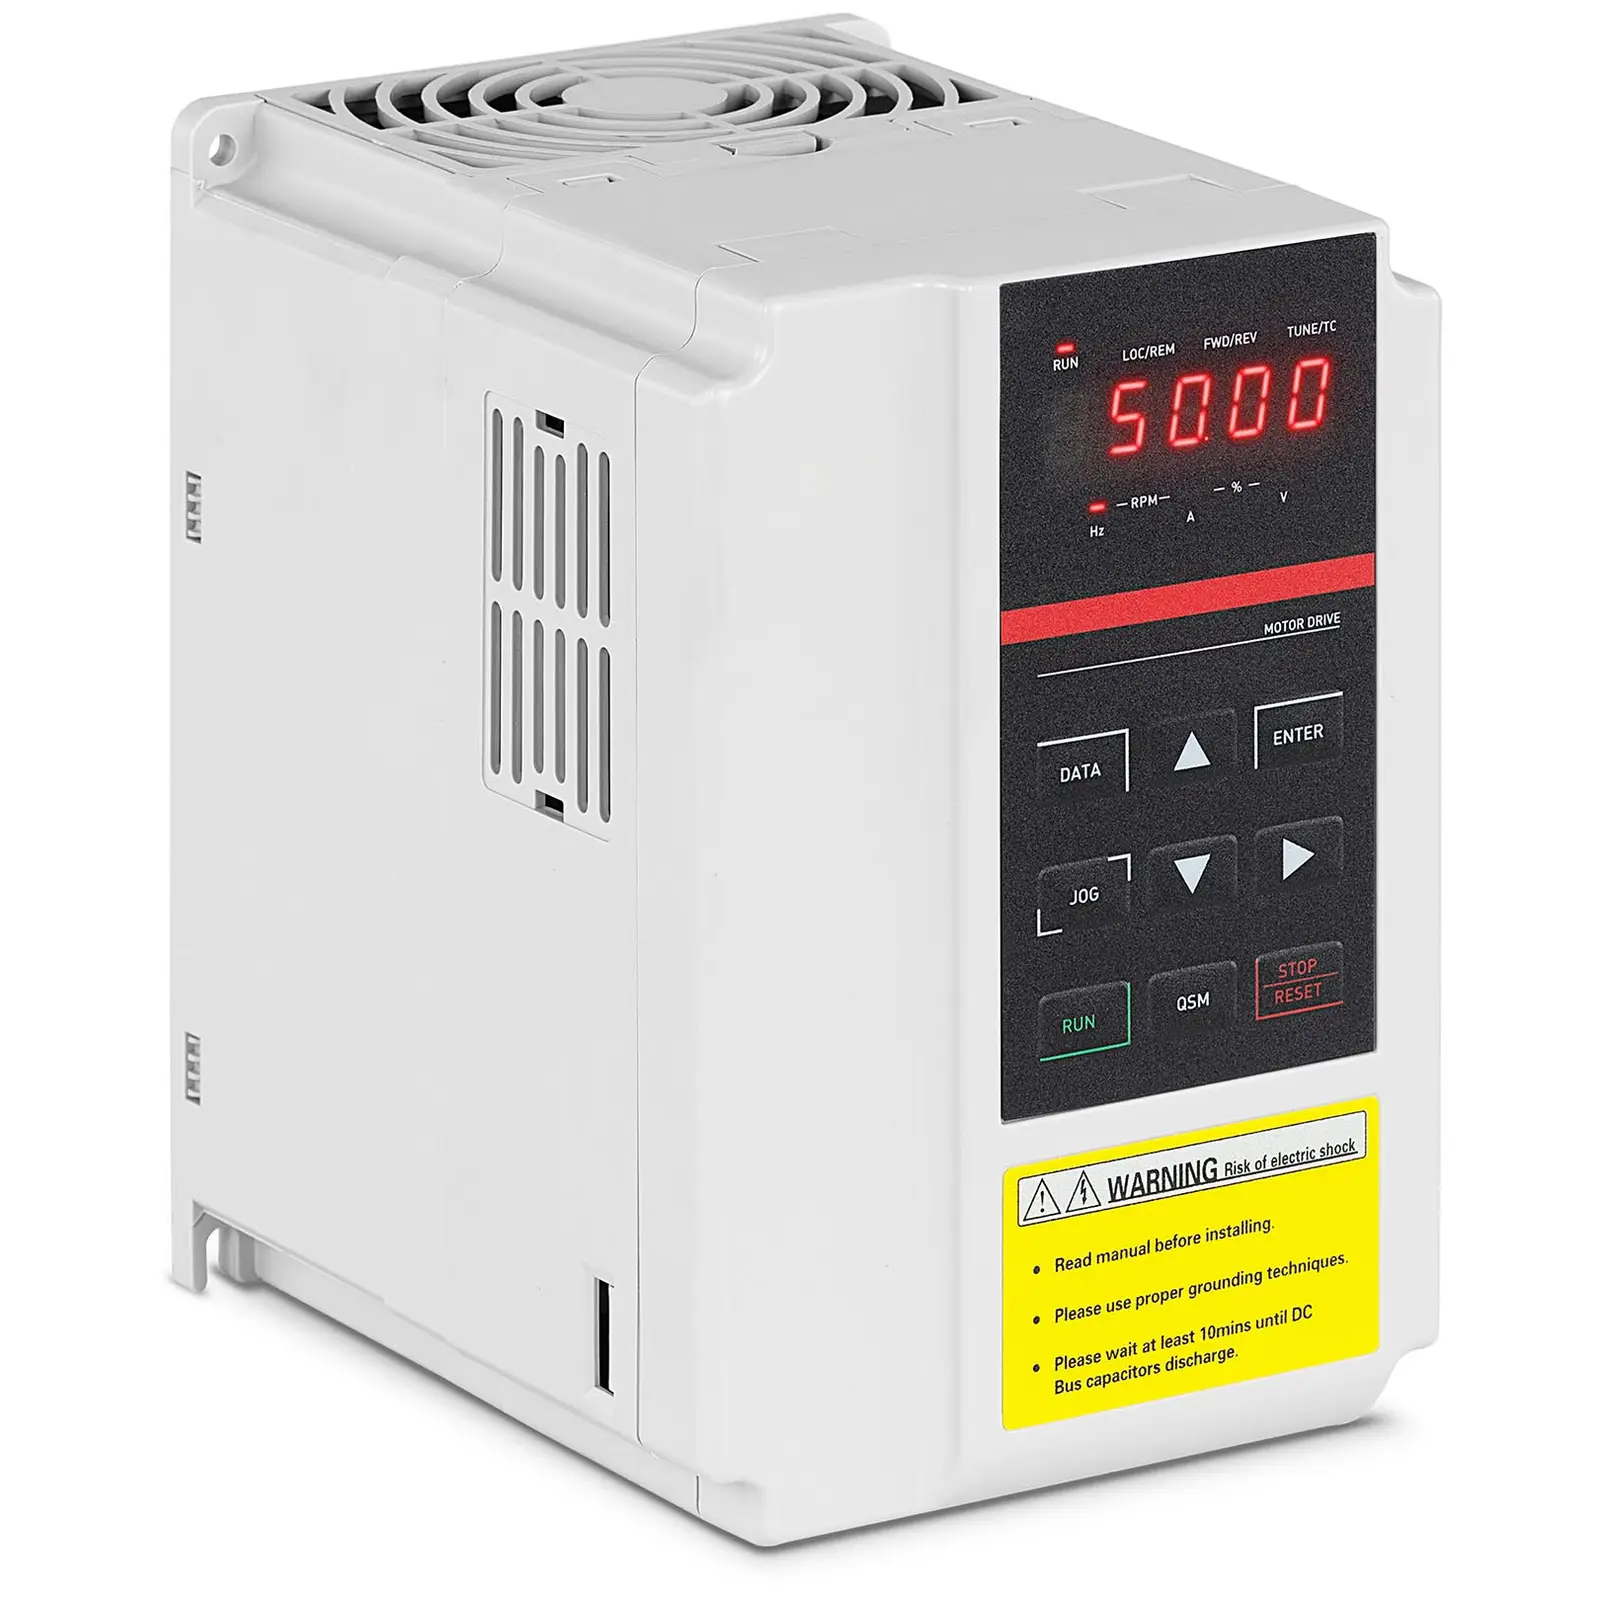 Měnič frekvence - 0,75 kW / 1 hp - 380 V - 50–60 Hz - LED